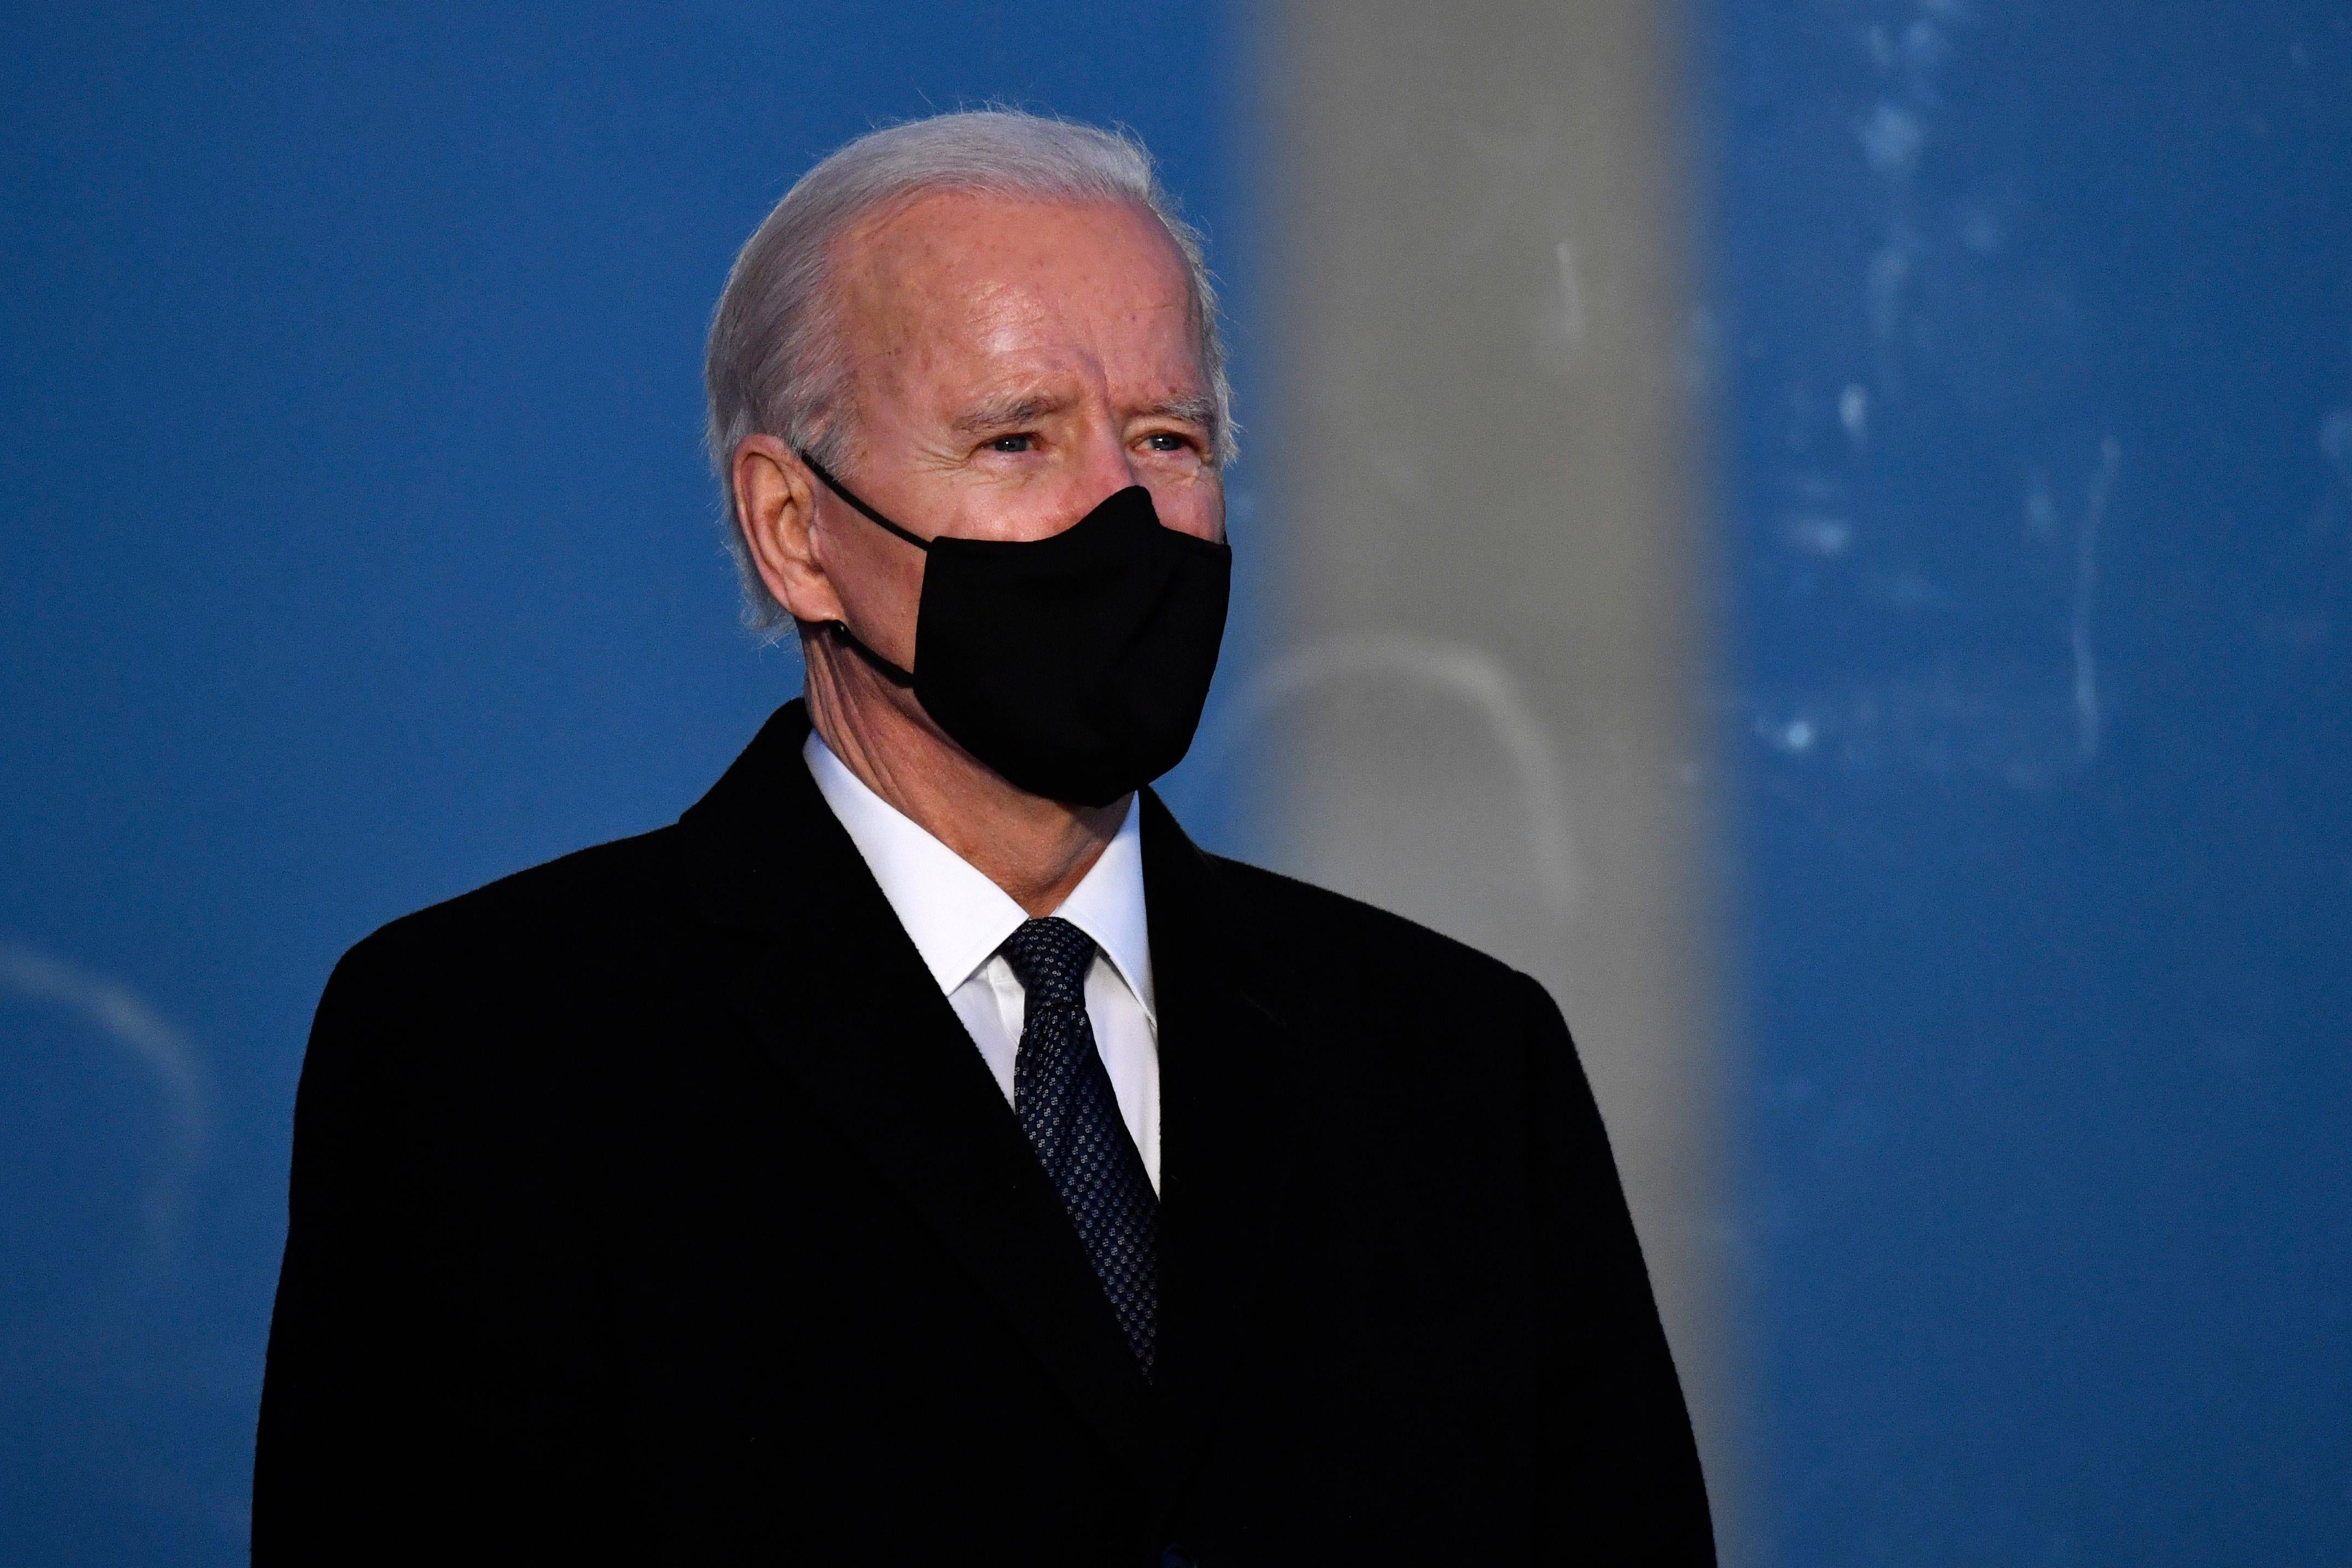 Biden in a mask
